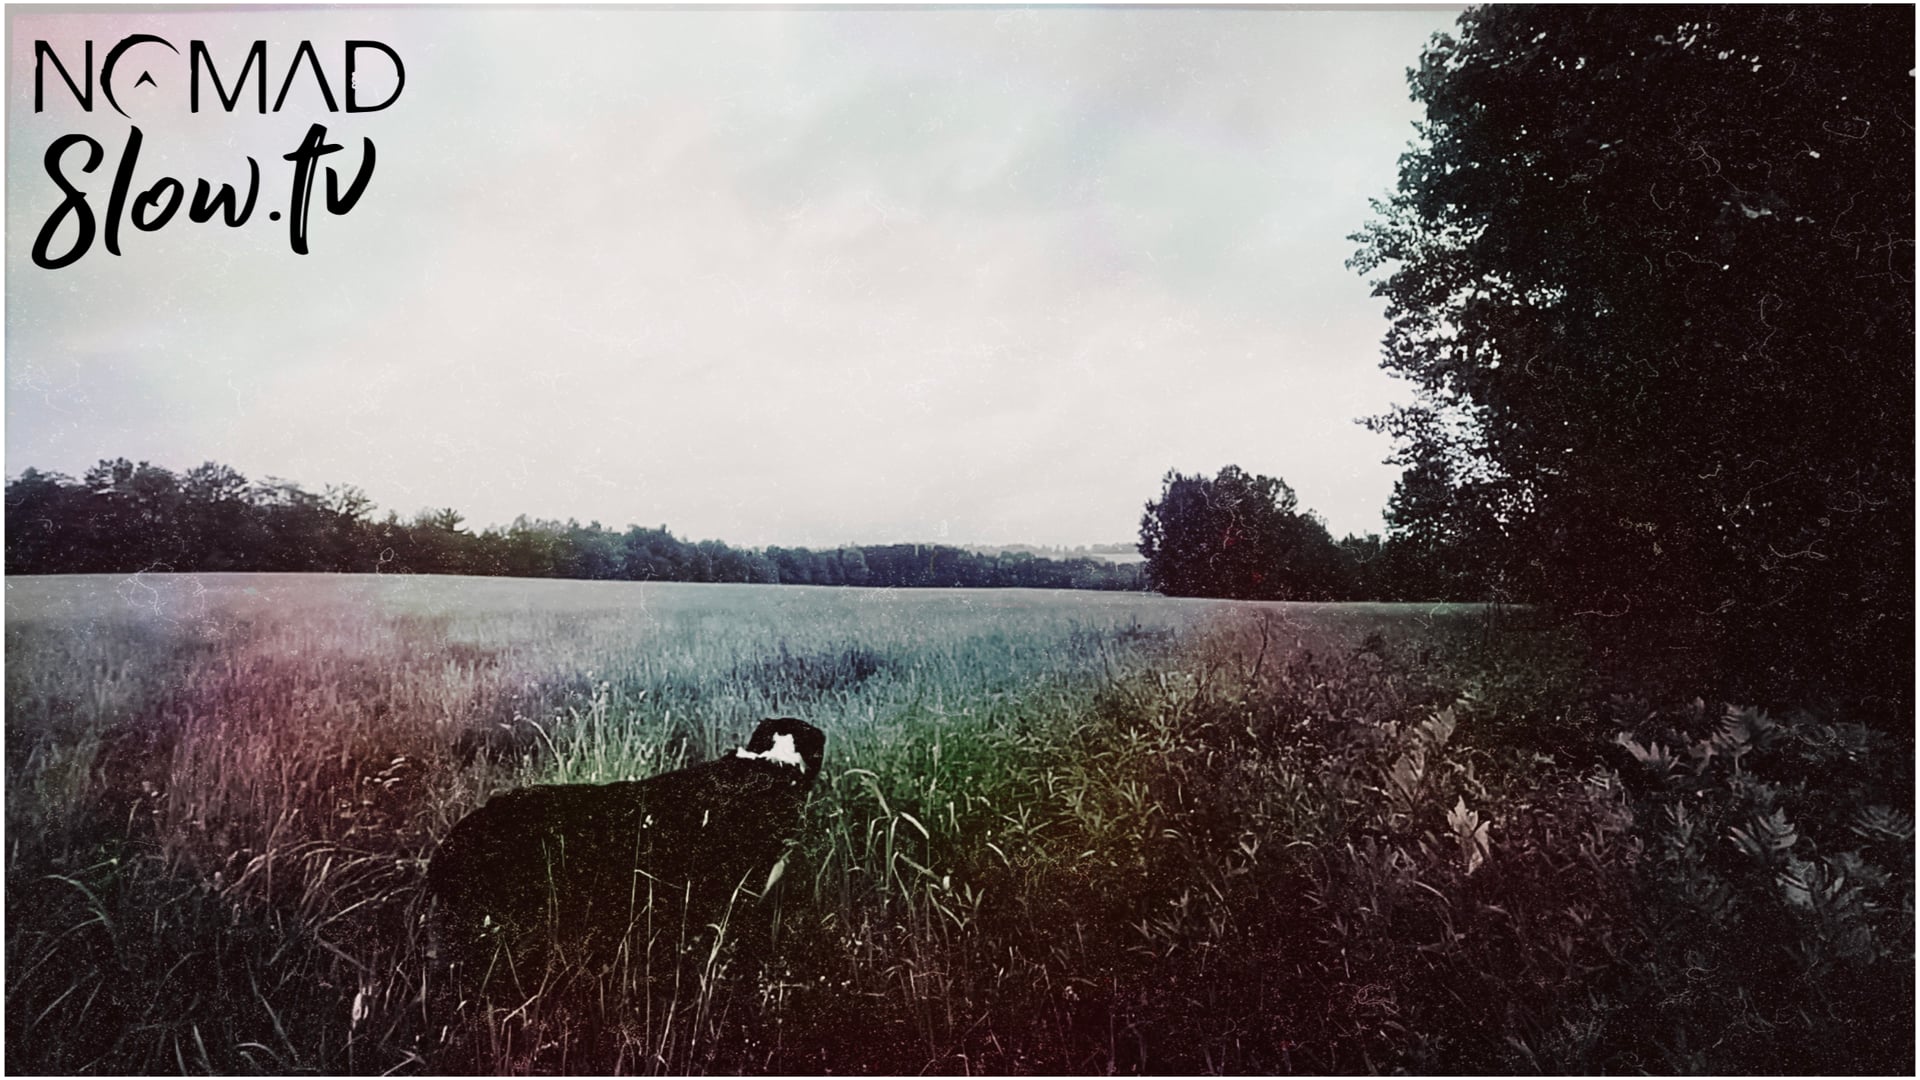 Black & White Dog in a Rainy Field